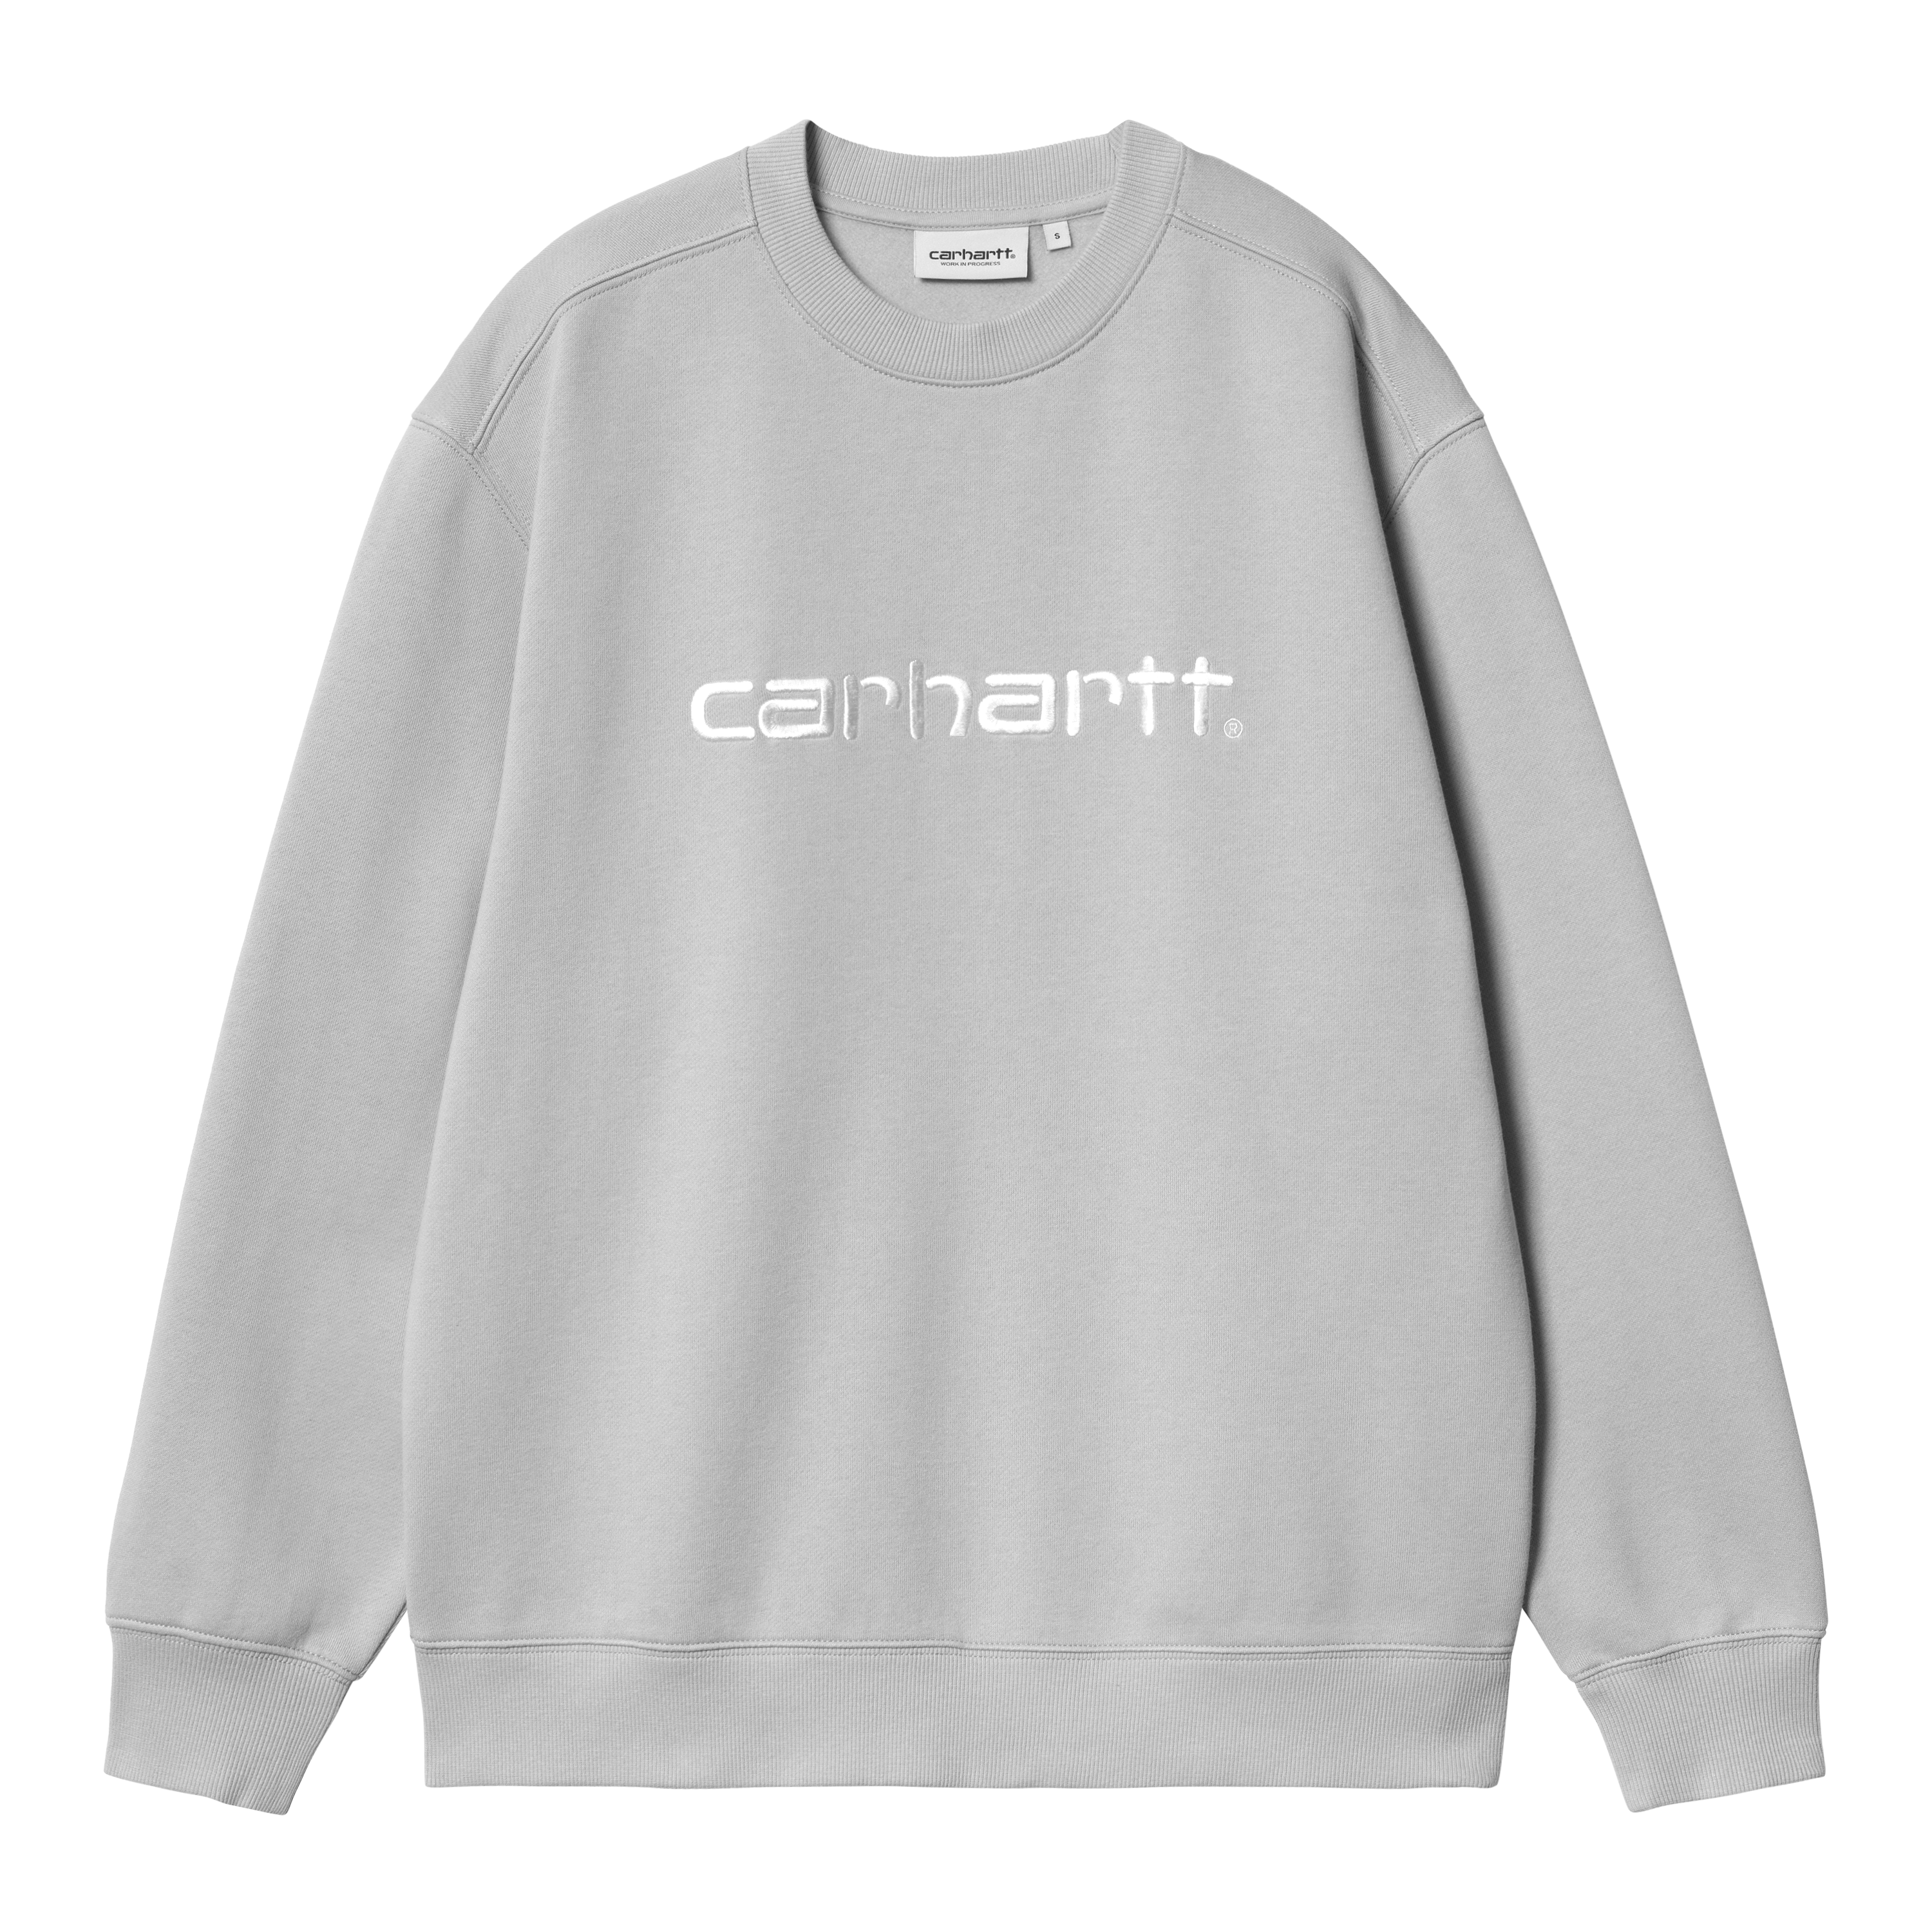 Carhartt WIP Women’s Carhartt Sweatshirt em